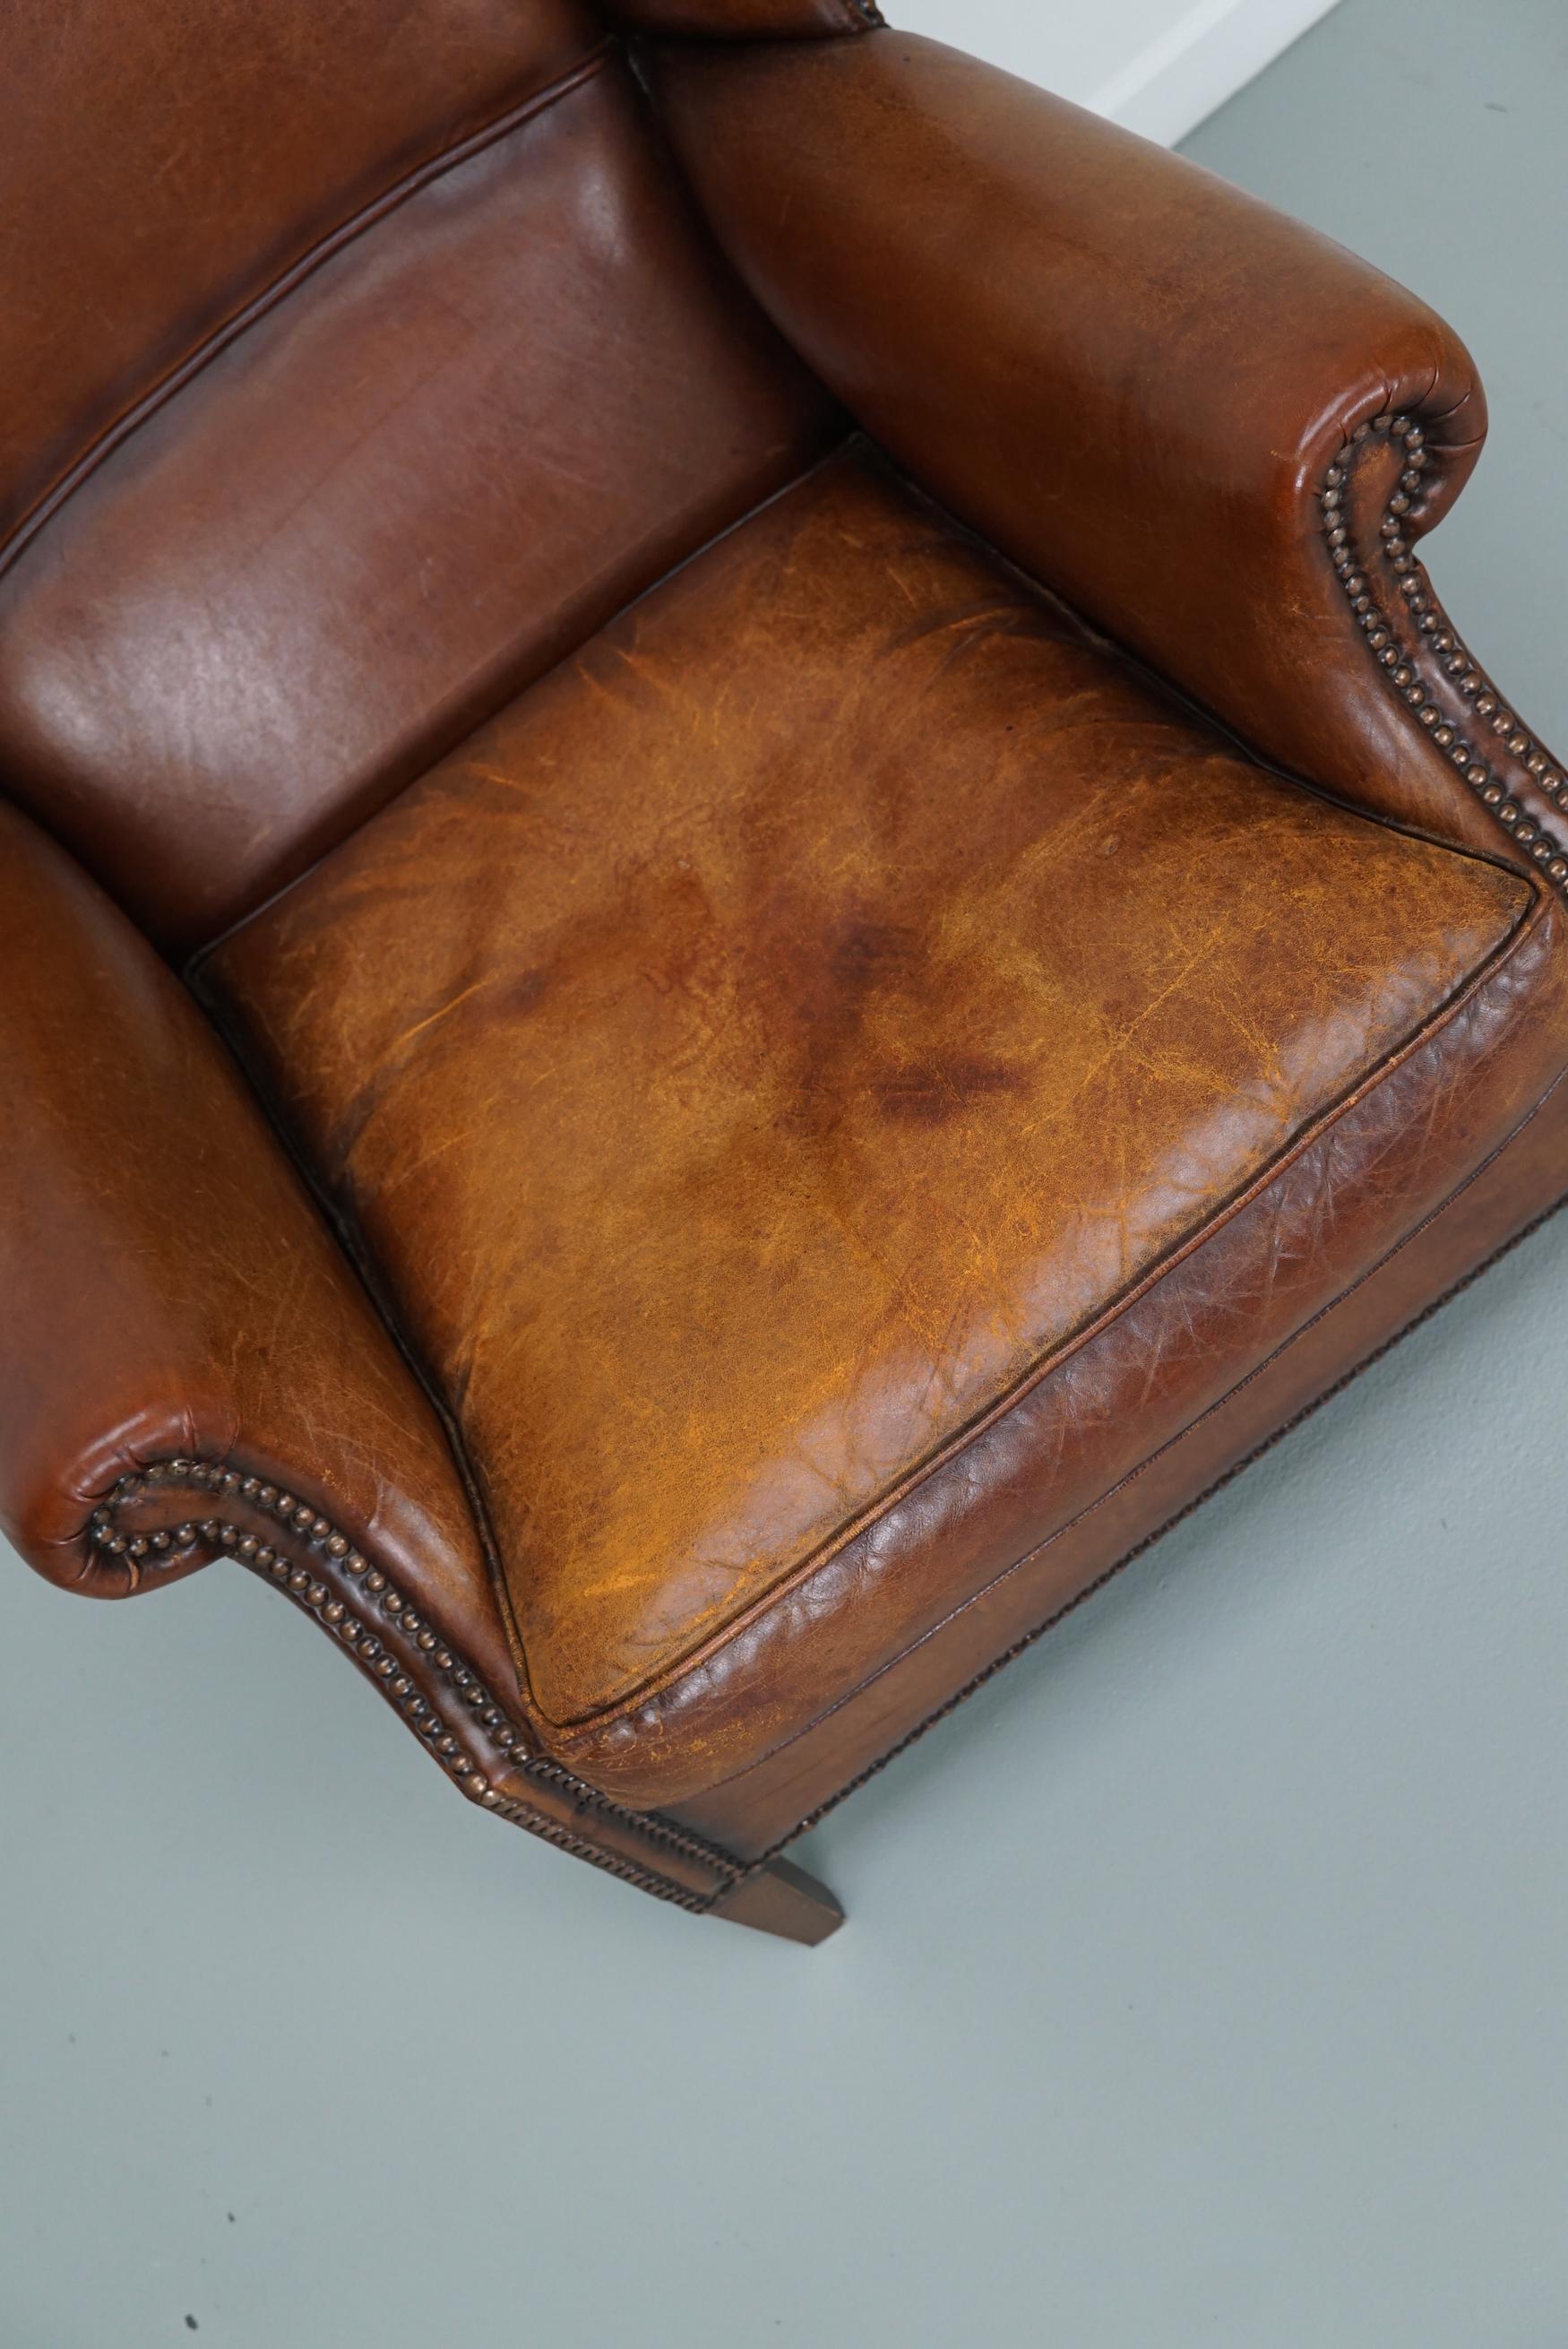 Vintage Dutch Cognac Colored Leather Club Chair For Sale 1